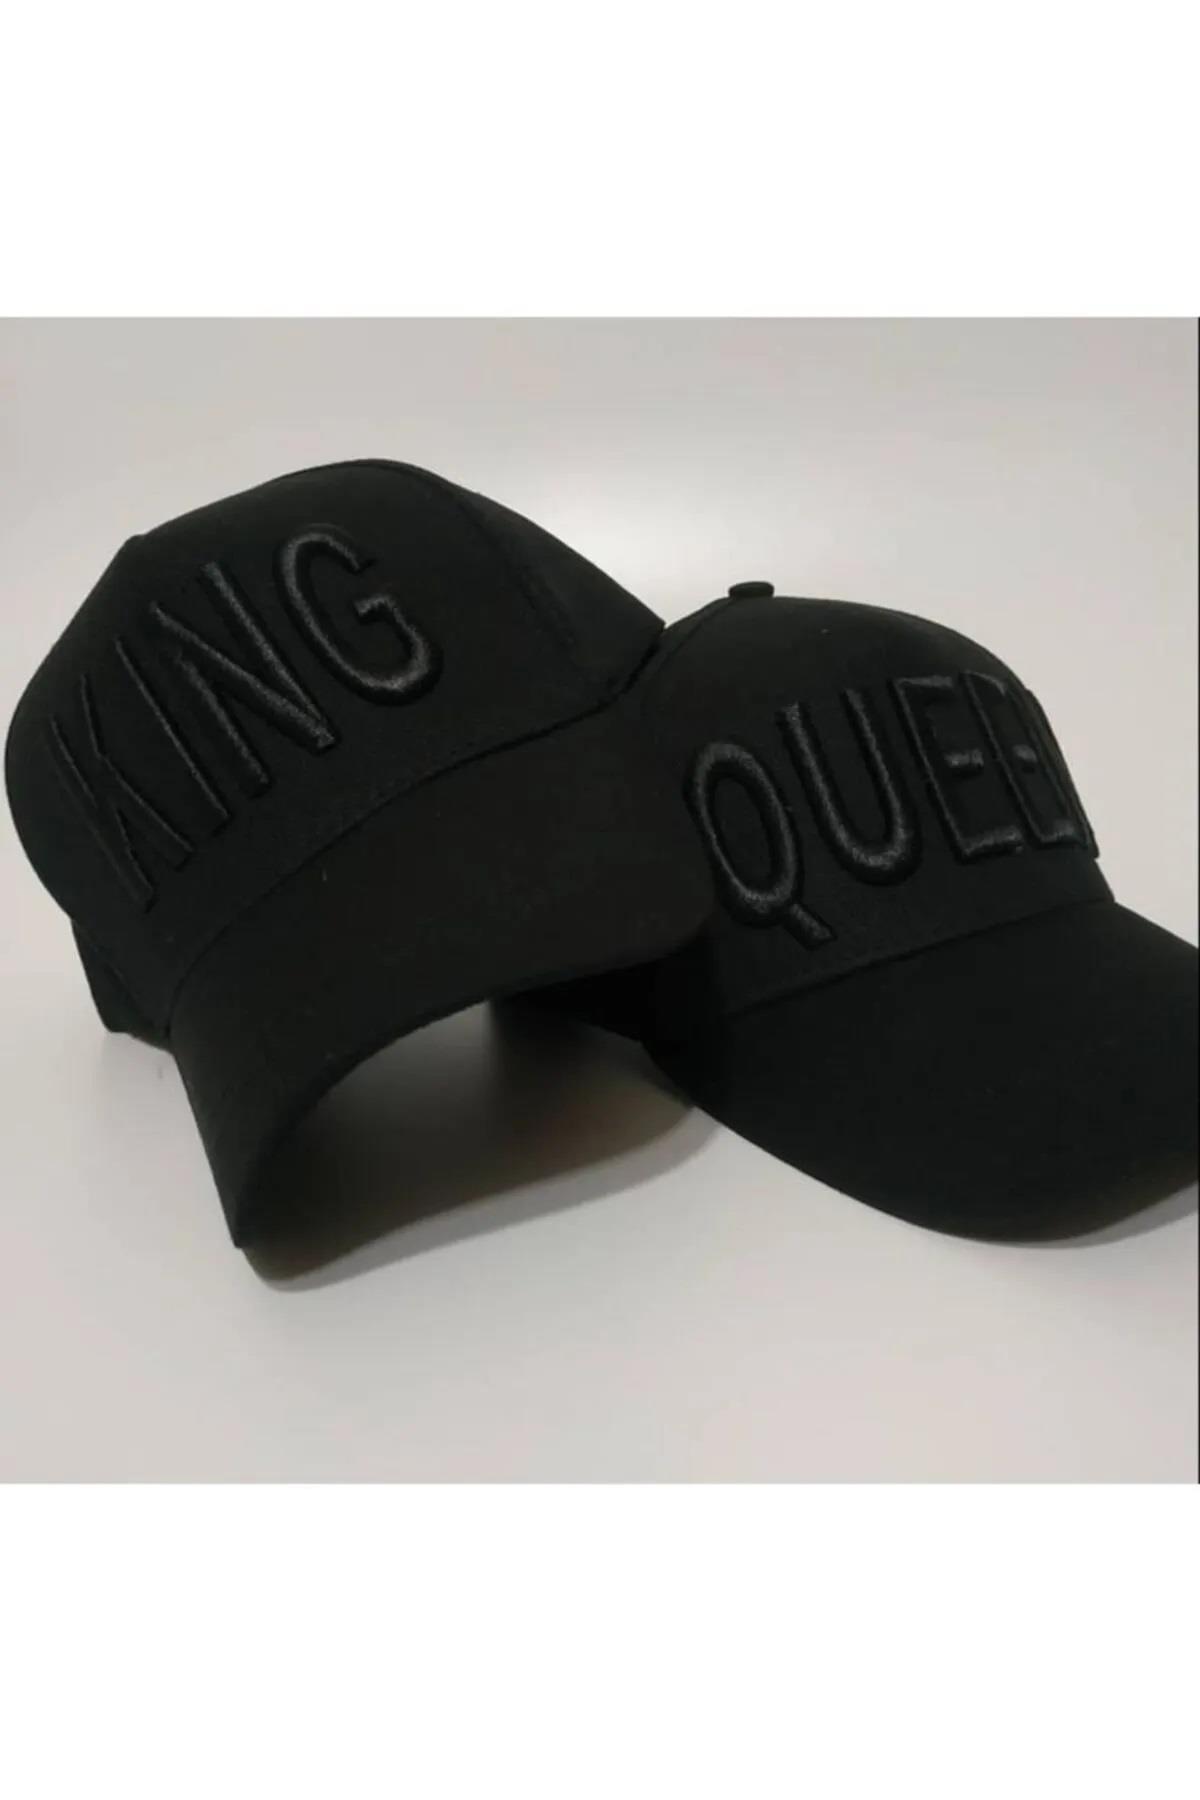 Kıng - Queen Siyah Nakış Yazılı 2'li Şapka | ÇamaşırcımShop